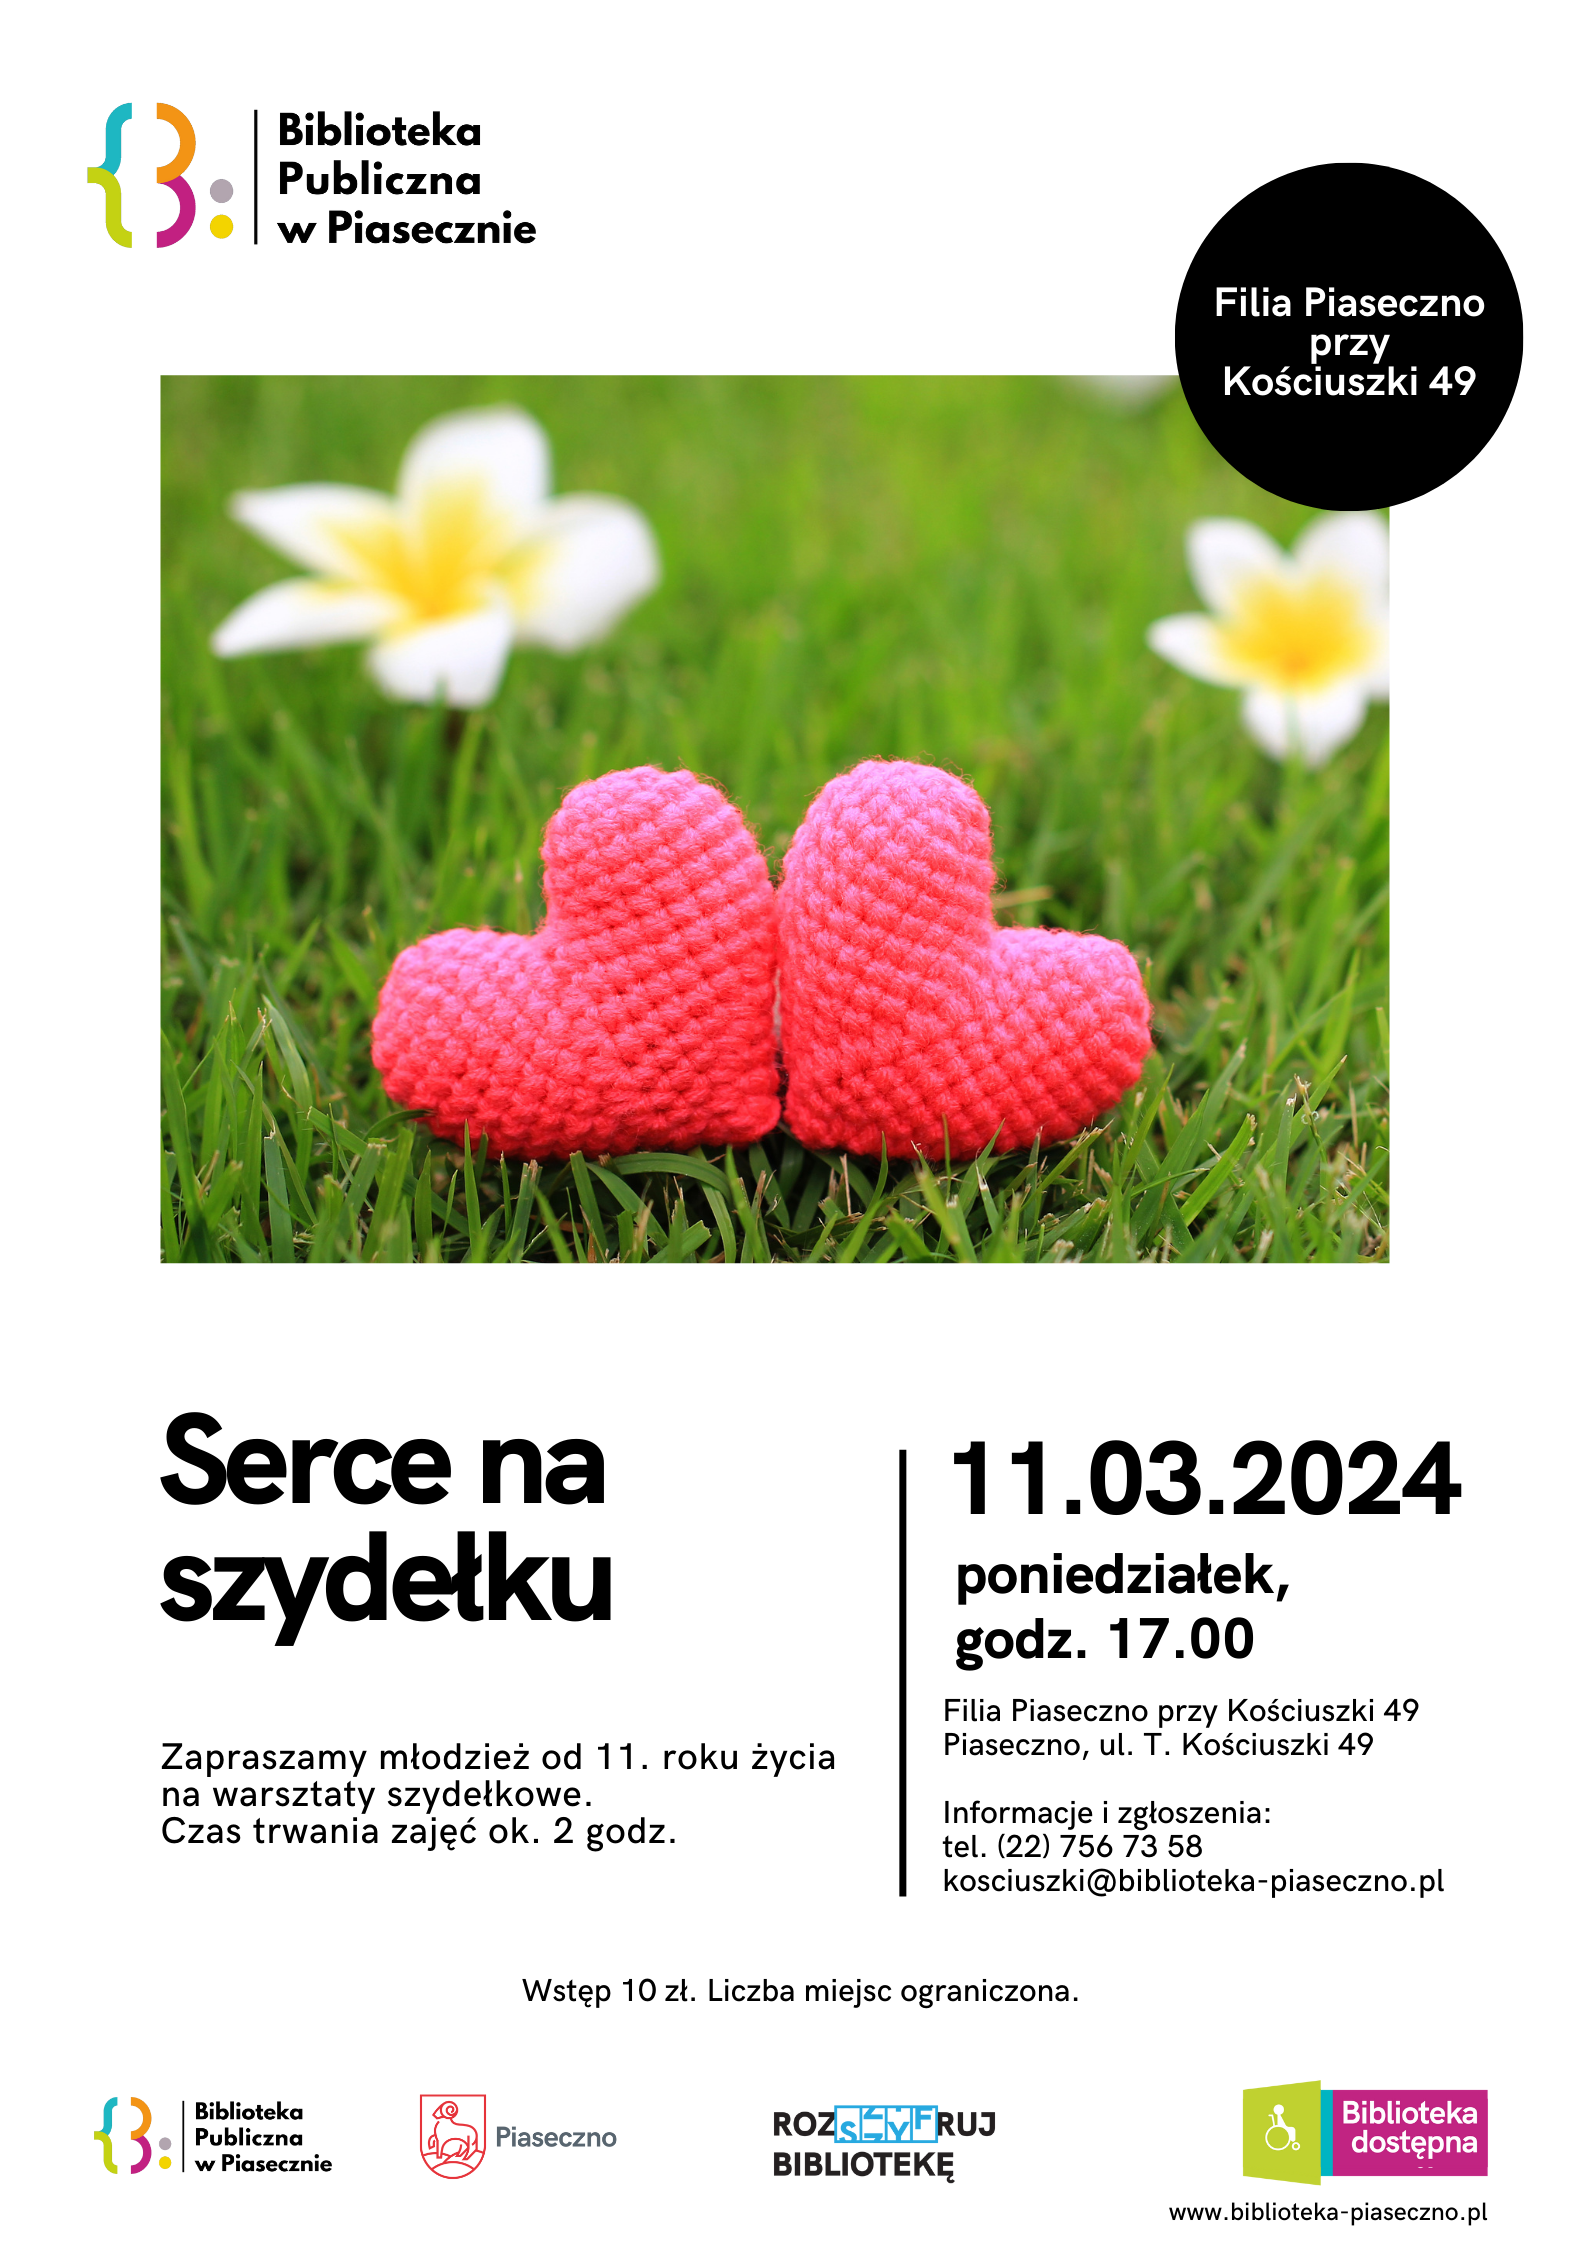 Plakat promujący warsztaty szydełkowe - serce na szydełku